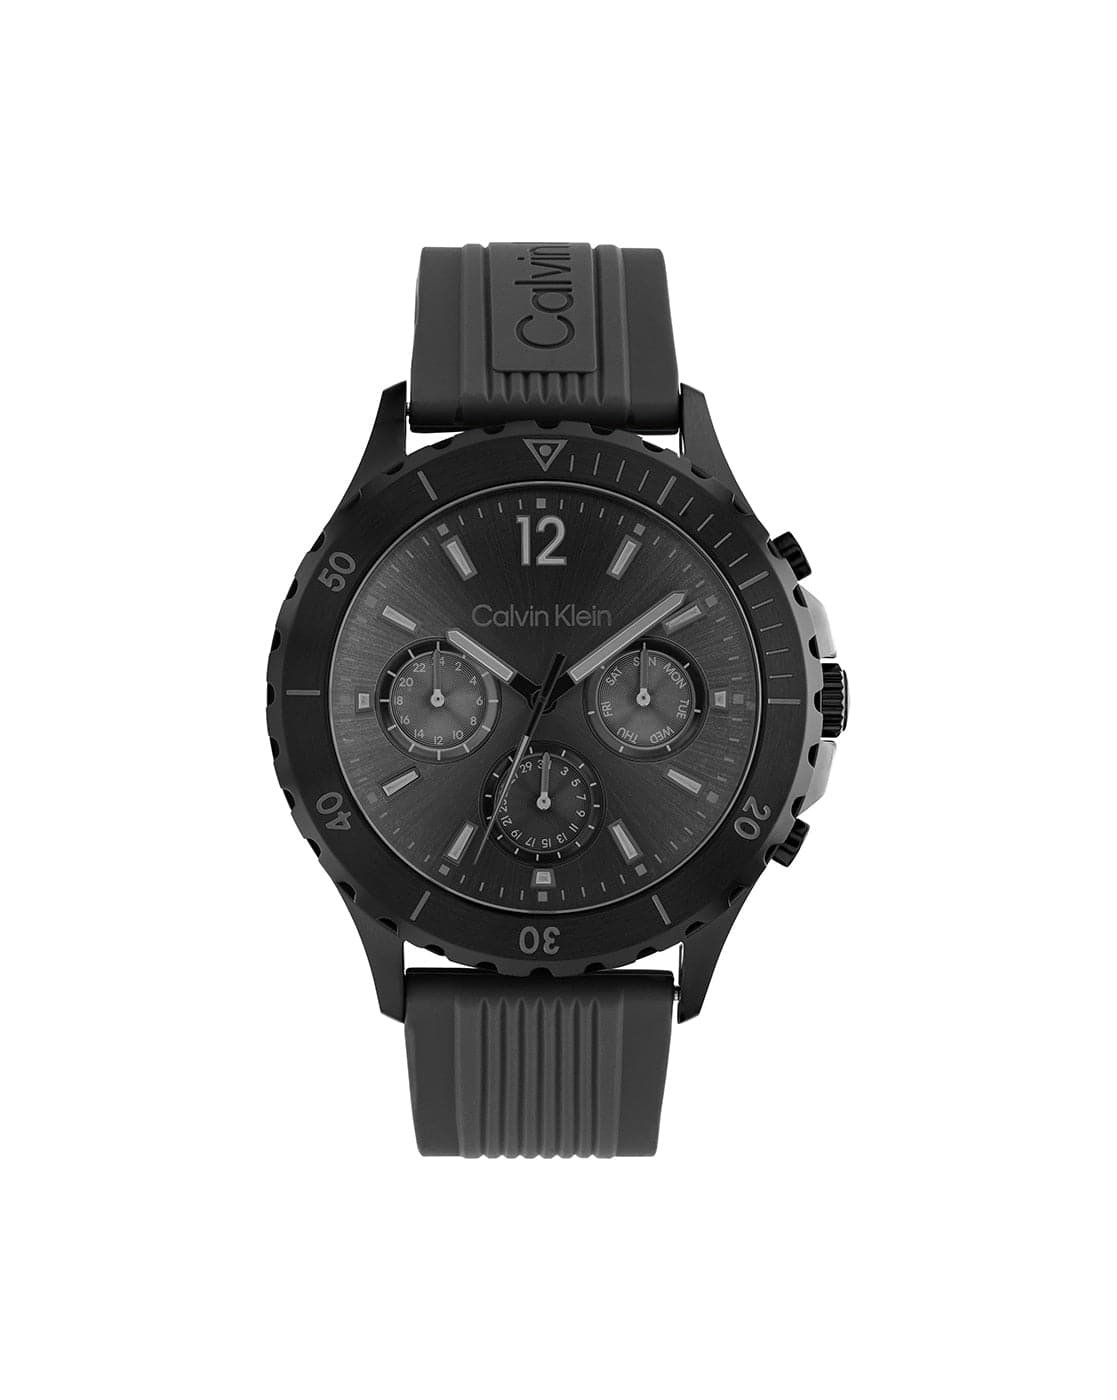 Calvin klein Sport 25200118 - Kamal Watch Company